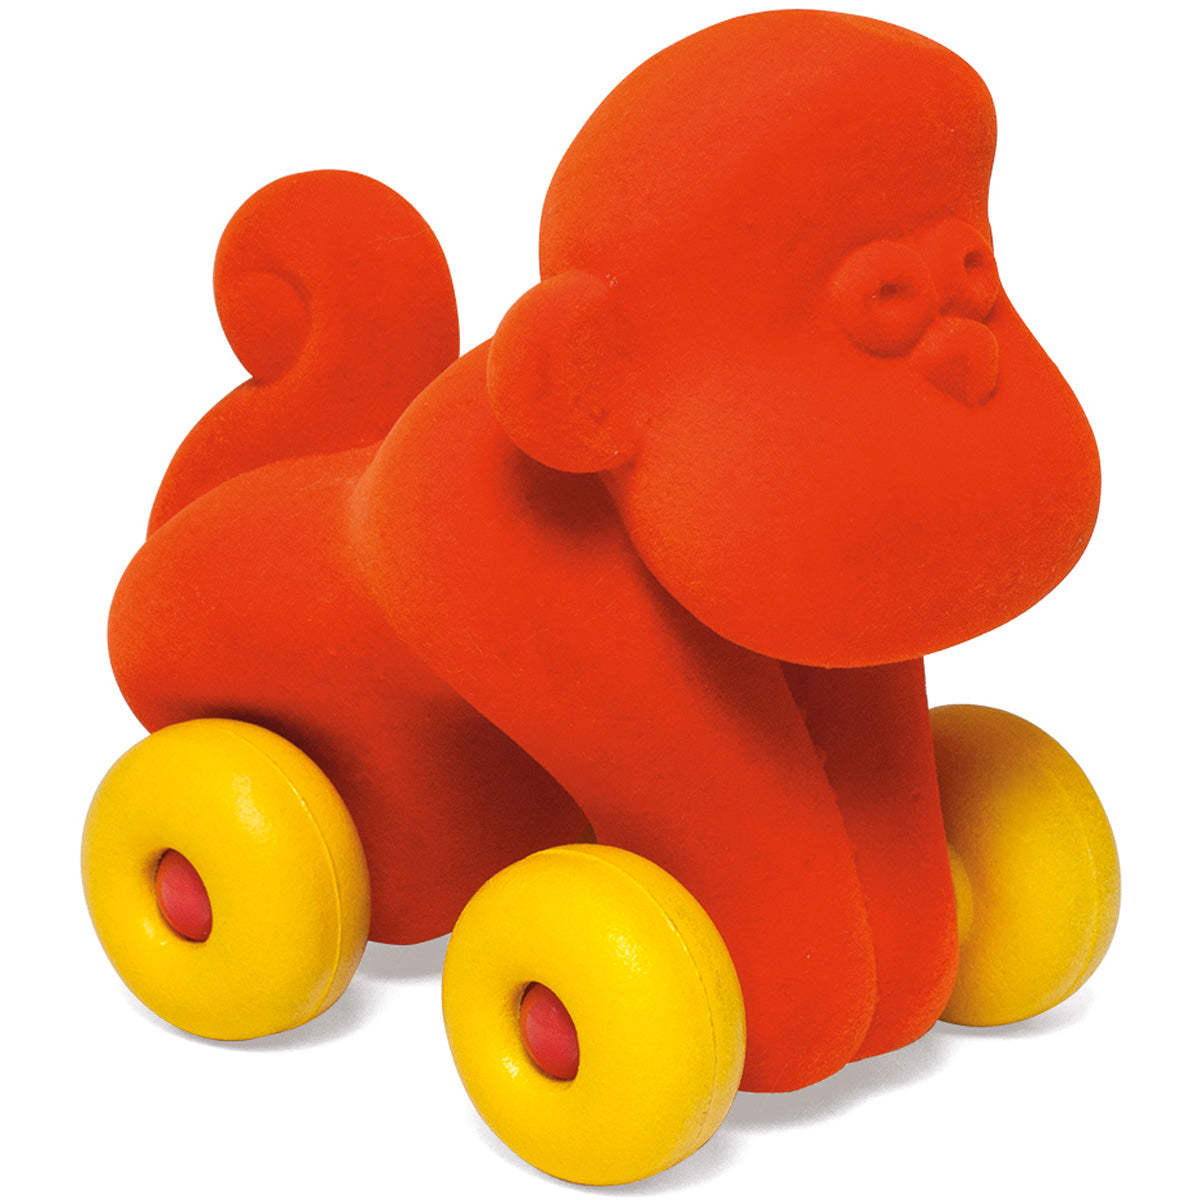 Monkey on wheels